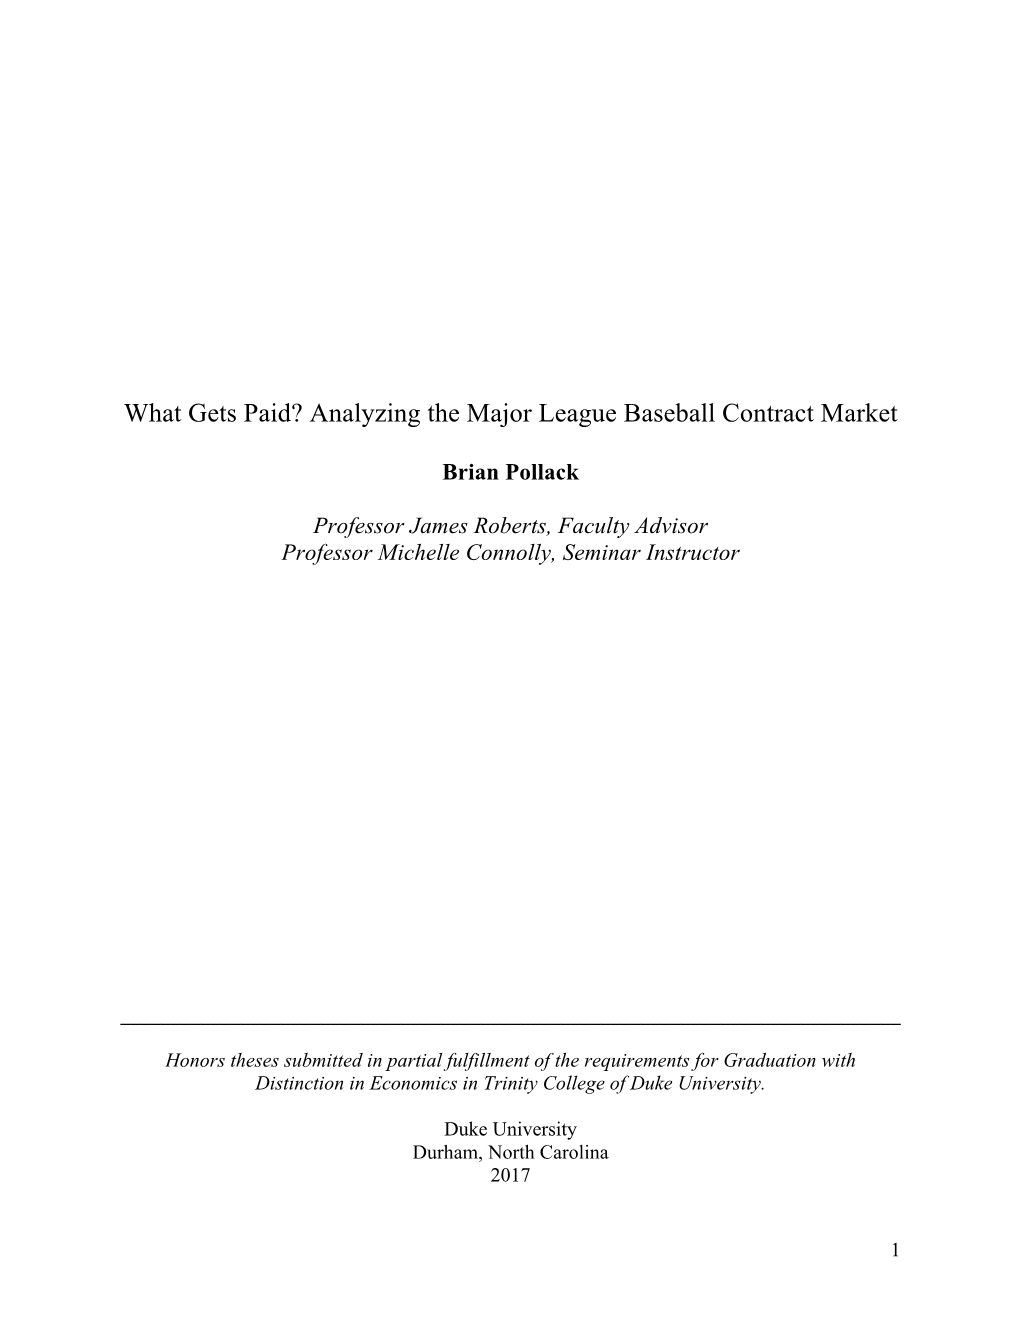 Analyzing the Major League Baseball Contract Market